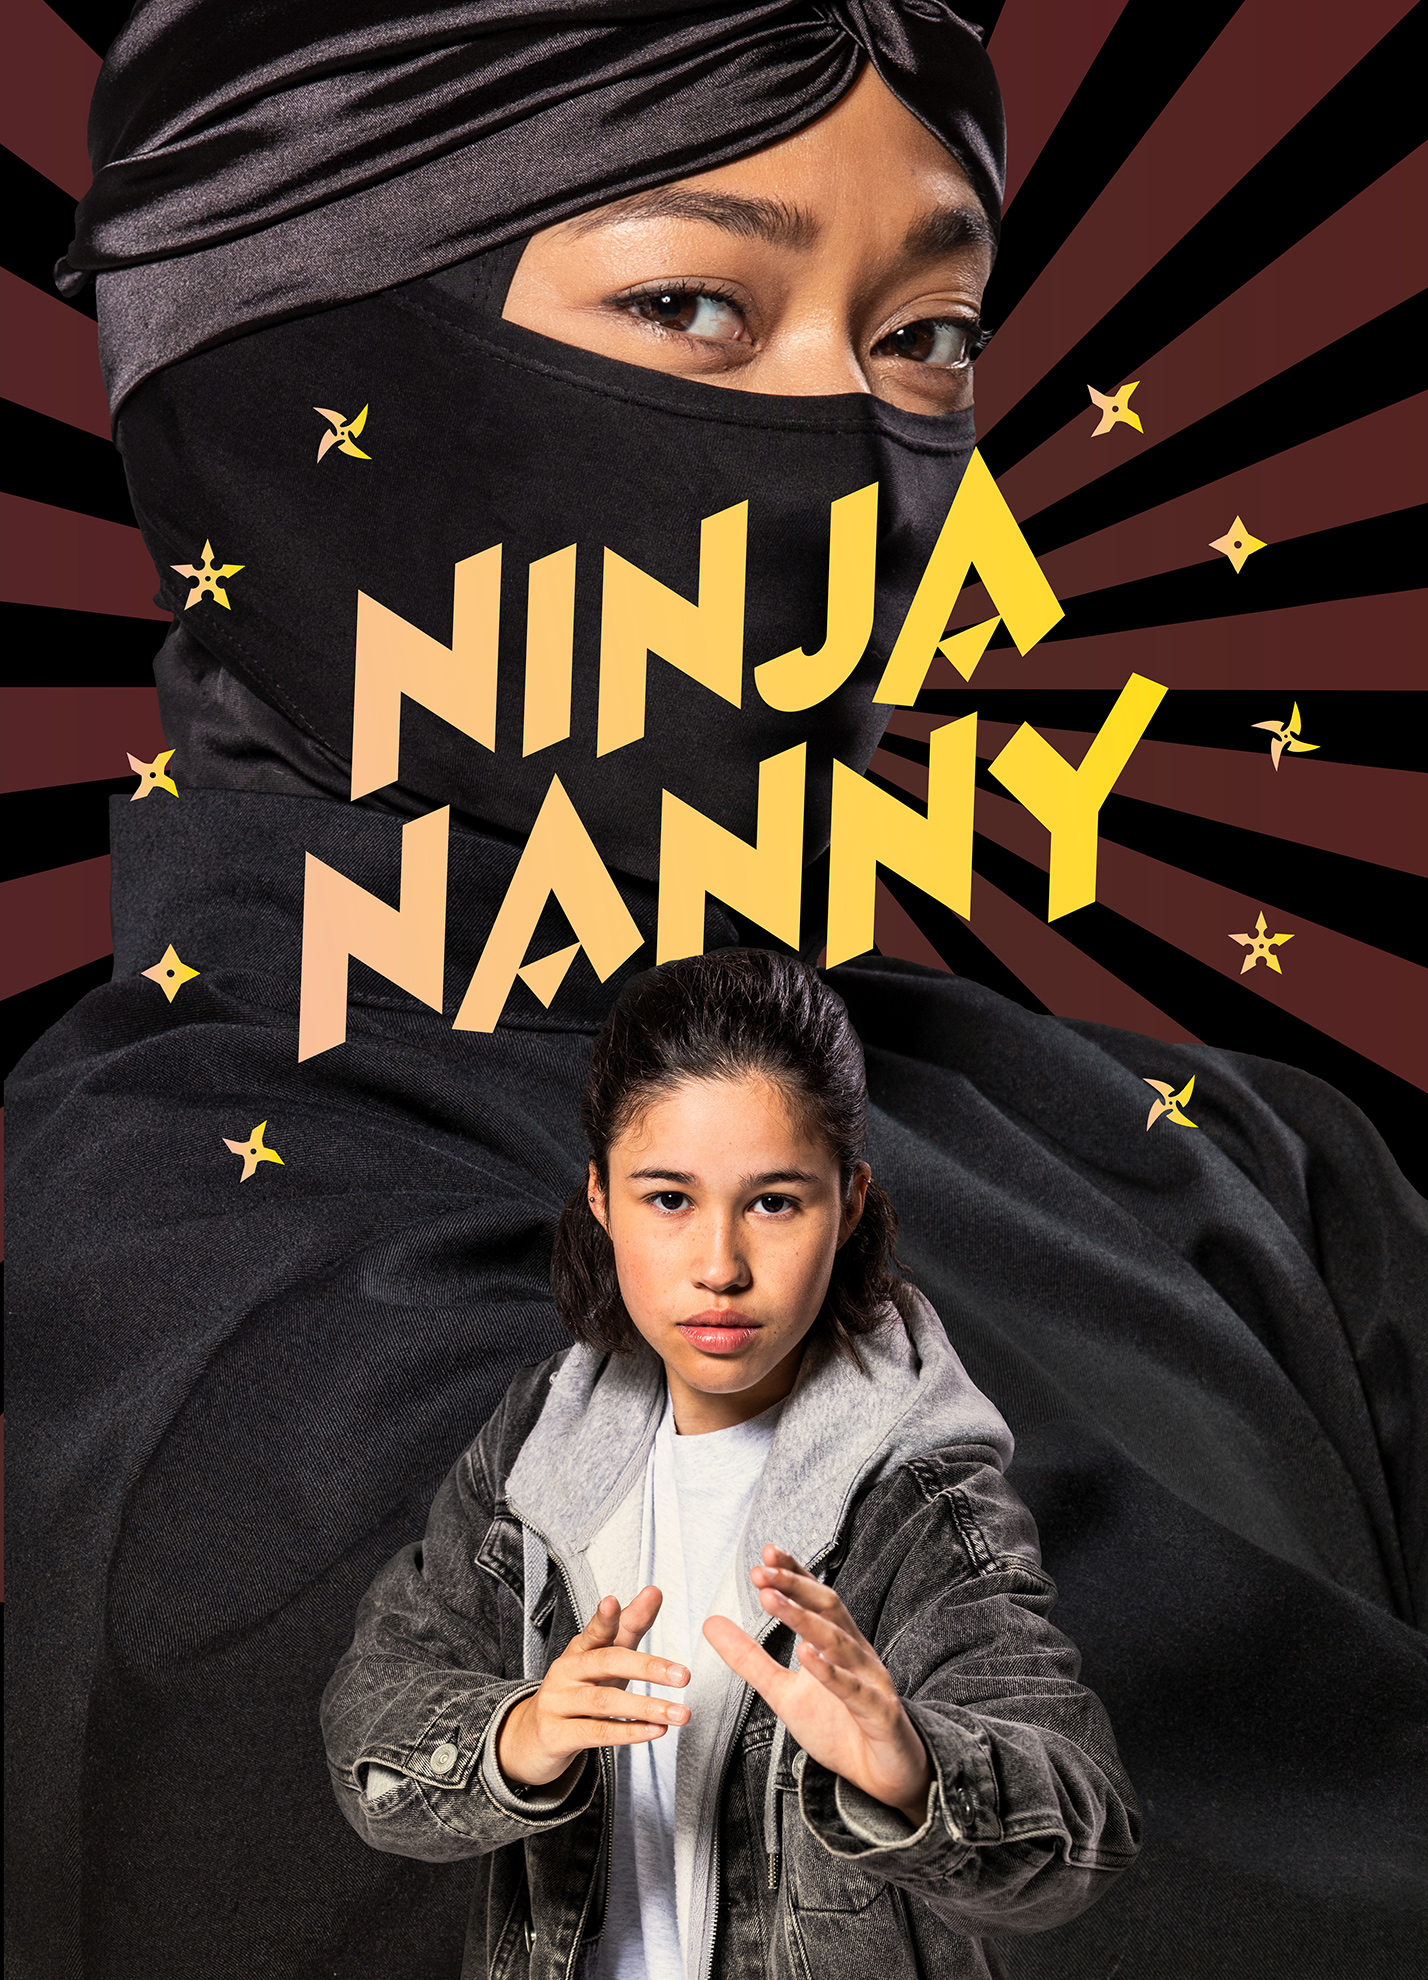 Ninja Nanny poster